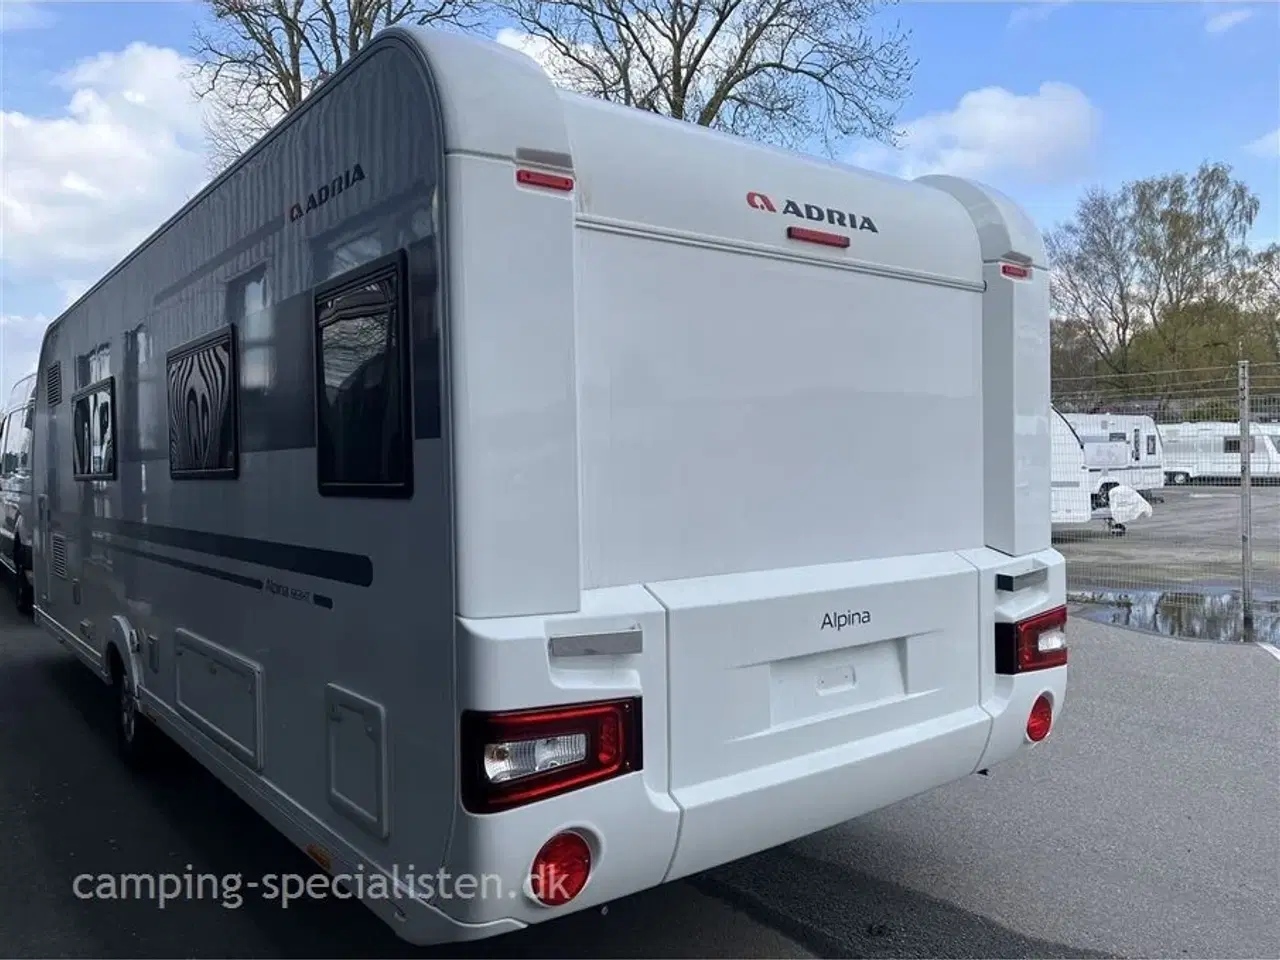 Billede 3 - 2019 - Adria Alpina 663 HT   Adria Alpina 663 HT model 2019 kan nu ses hos Camping-Specialisten.dk i Aarhus